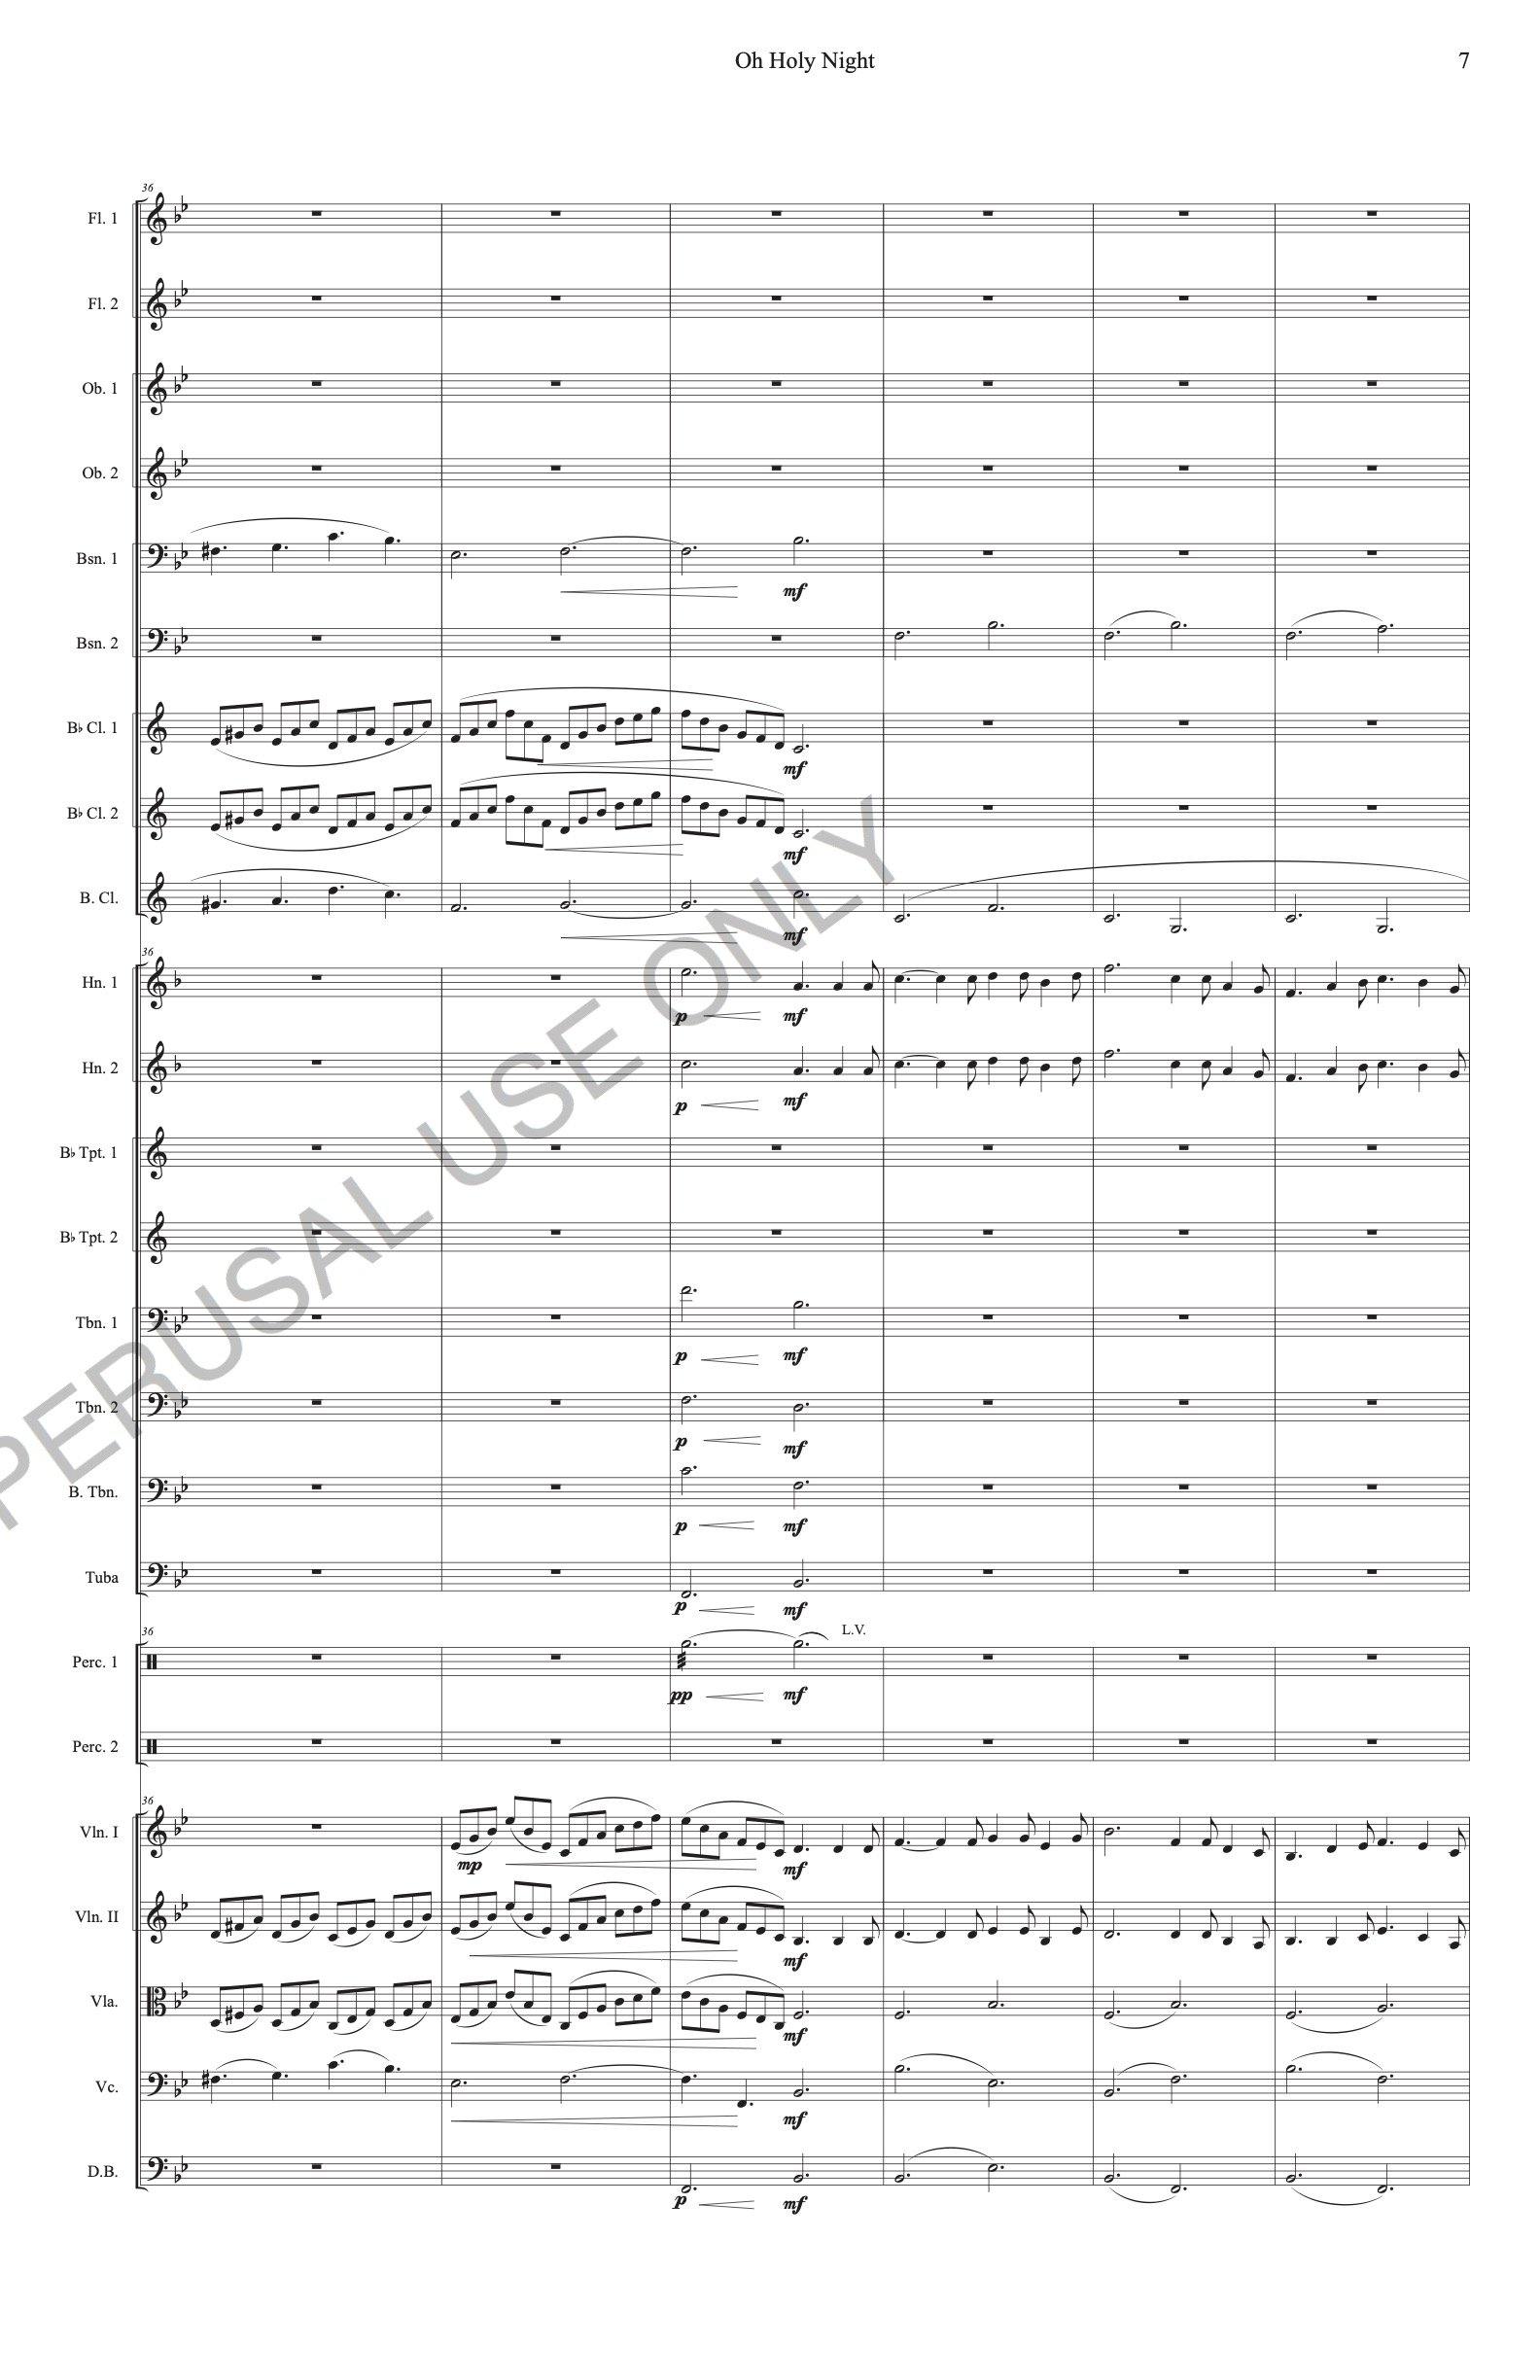 Symphony Orchestra sheet music: Oh Holy Night - A Magical Christmas Music - ChaipruckMekara